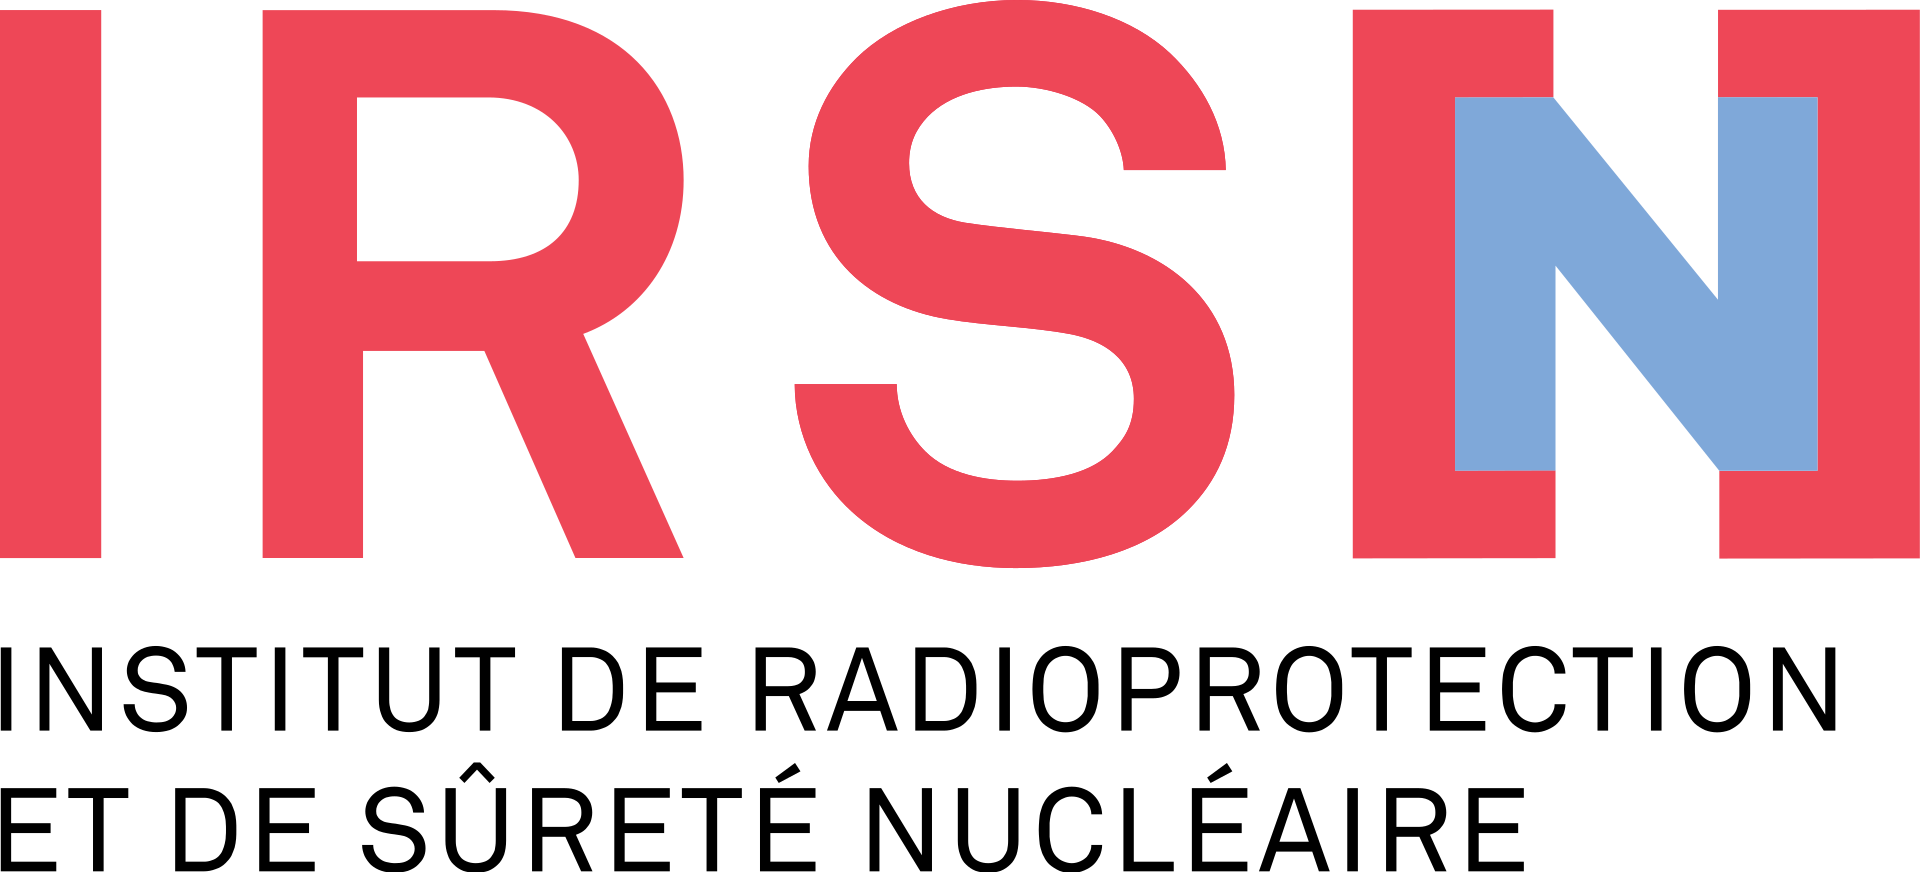 logo IRSN